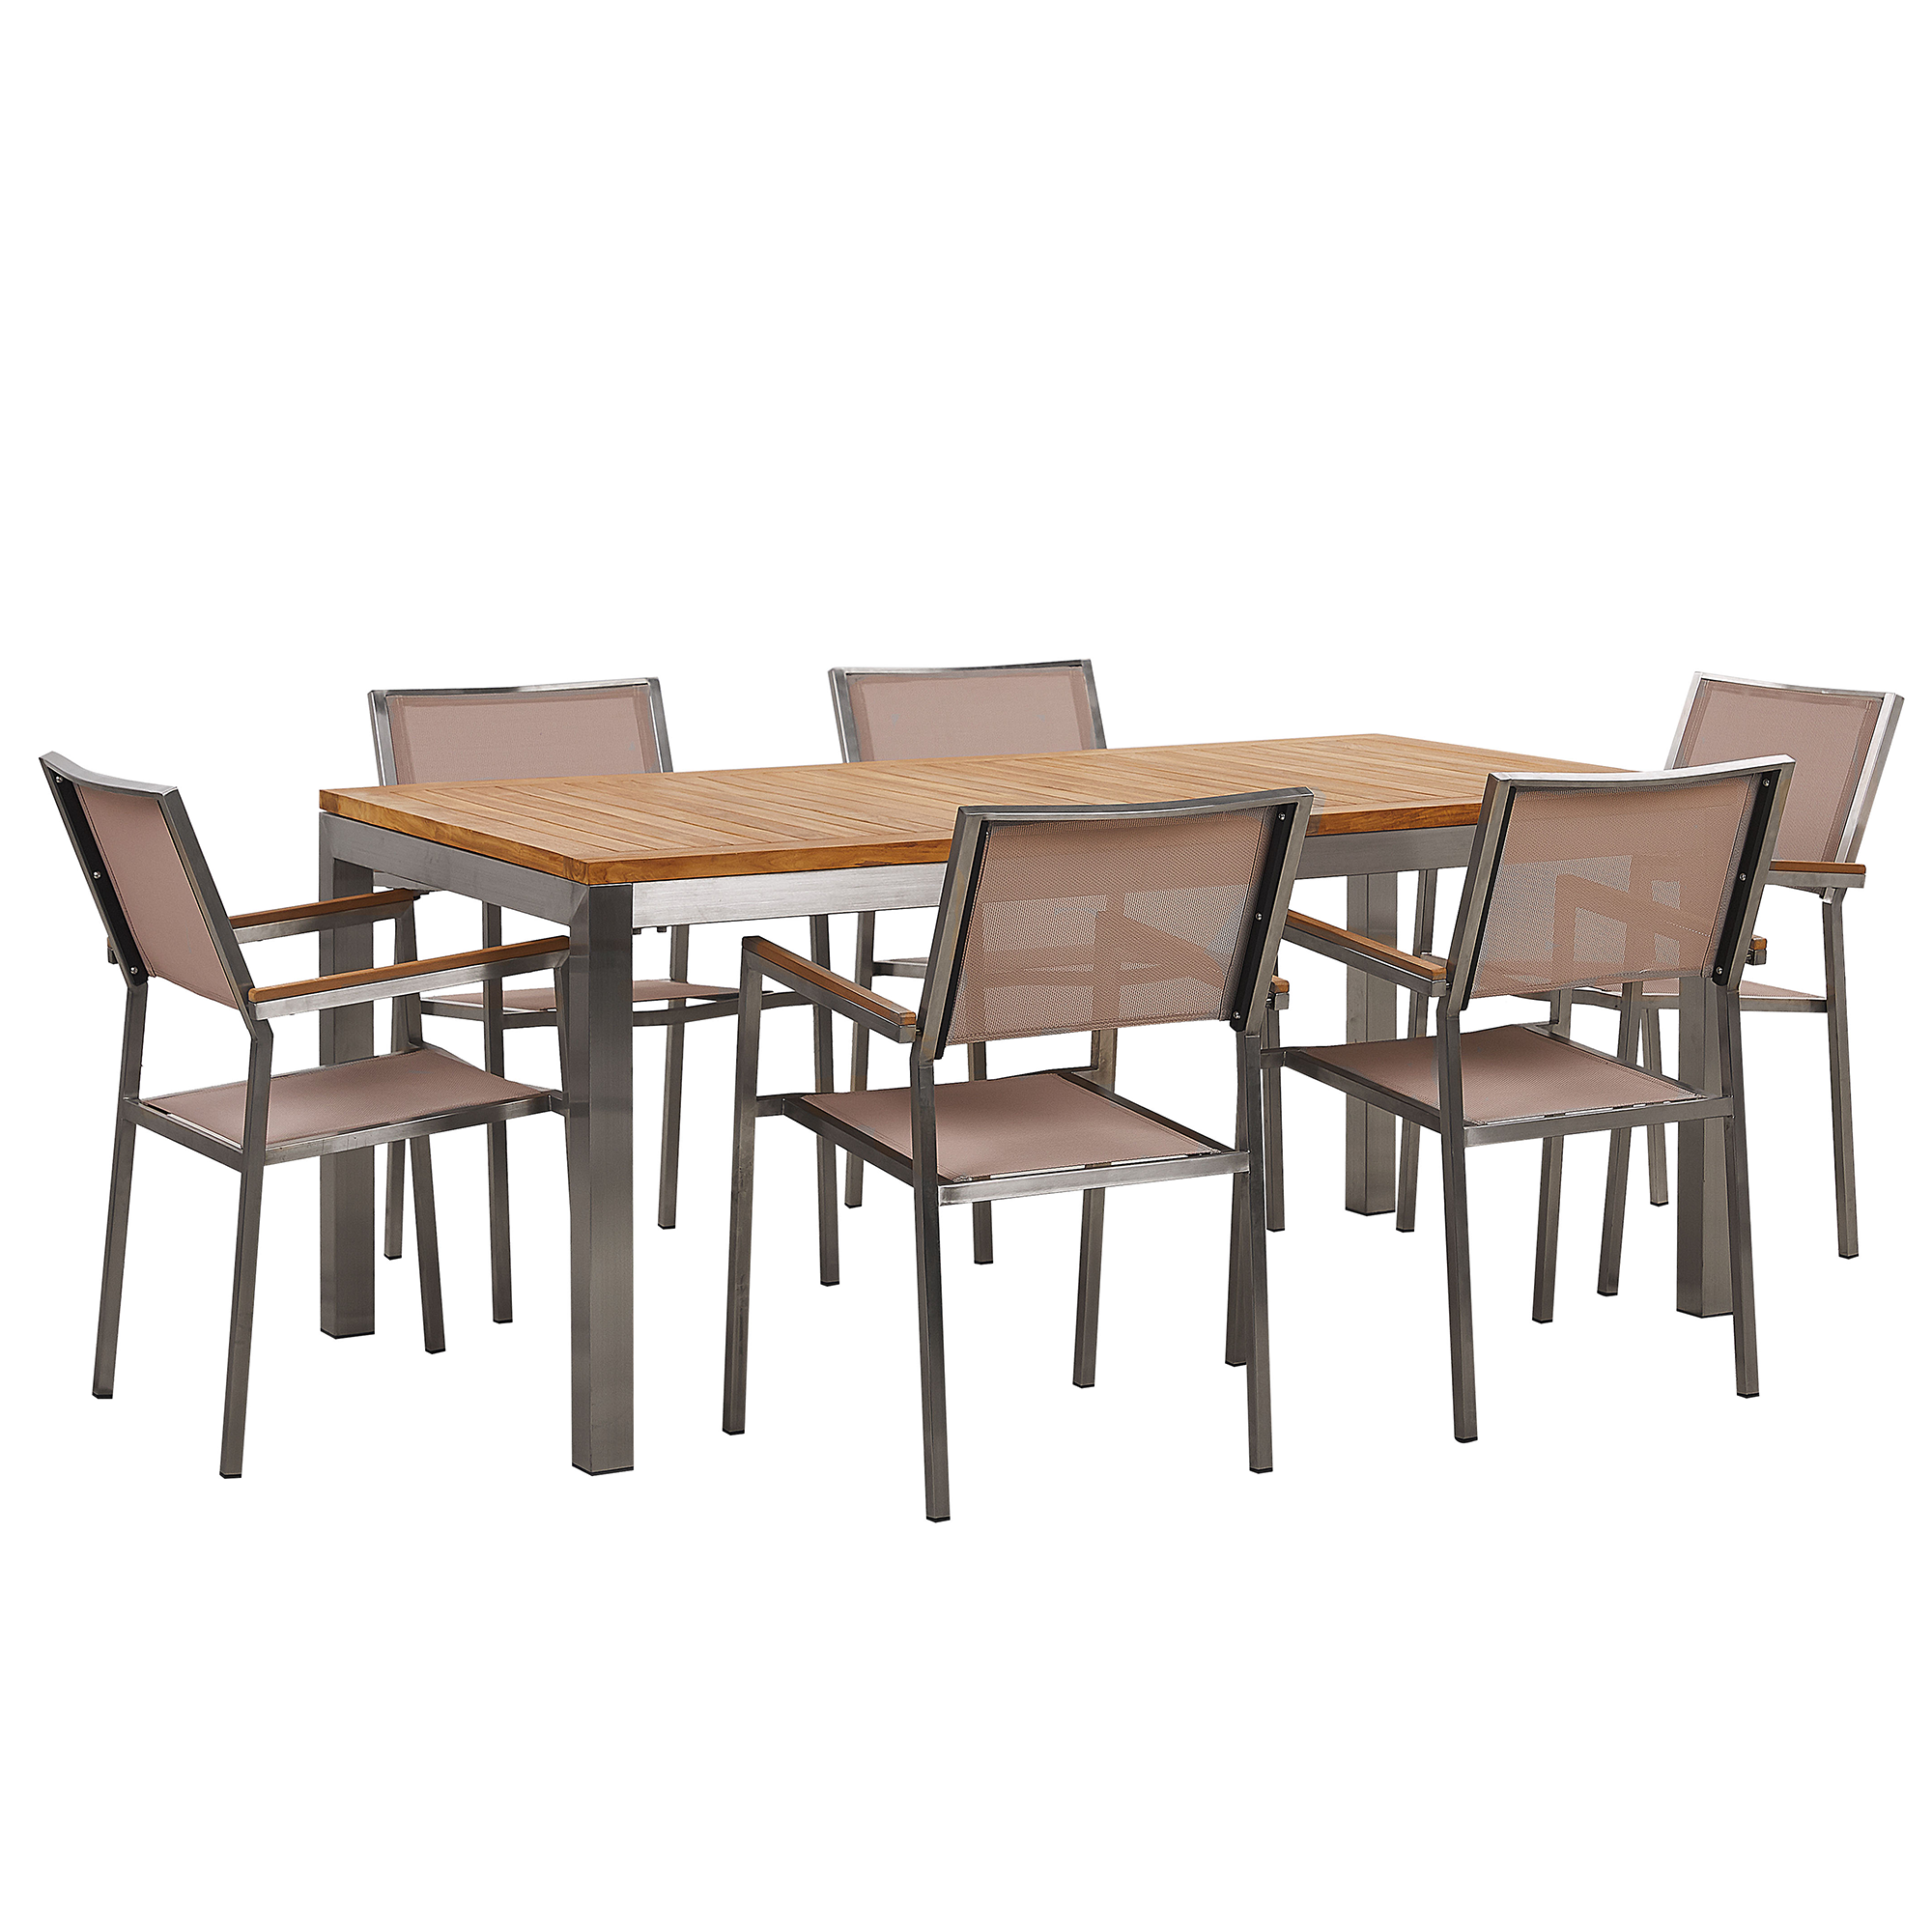 Beliani Garden Dining Set Light Teak Wood Top Steel Frame 180 x 90 cm with 6 Beige Chairs